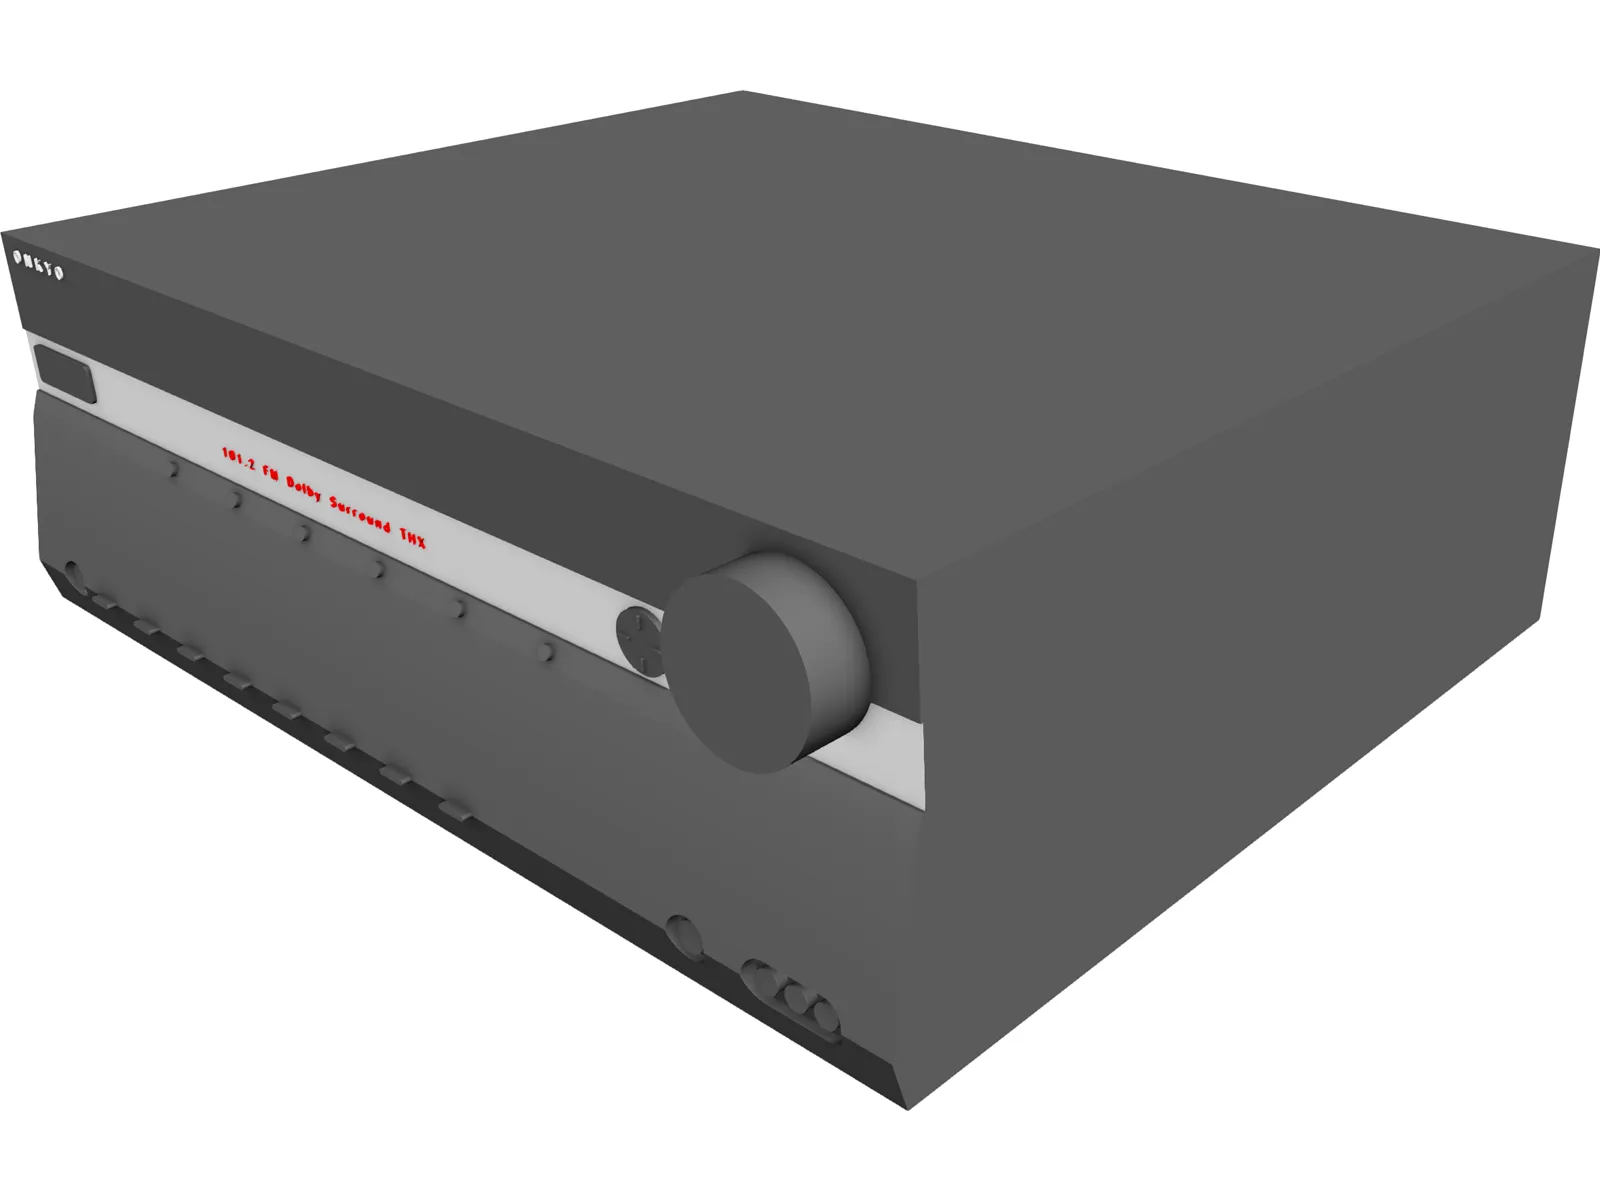 Onkyo TX-SR505E Amplifier 3D Model